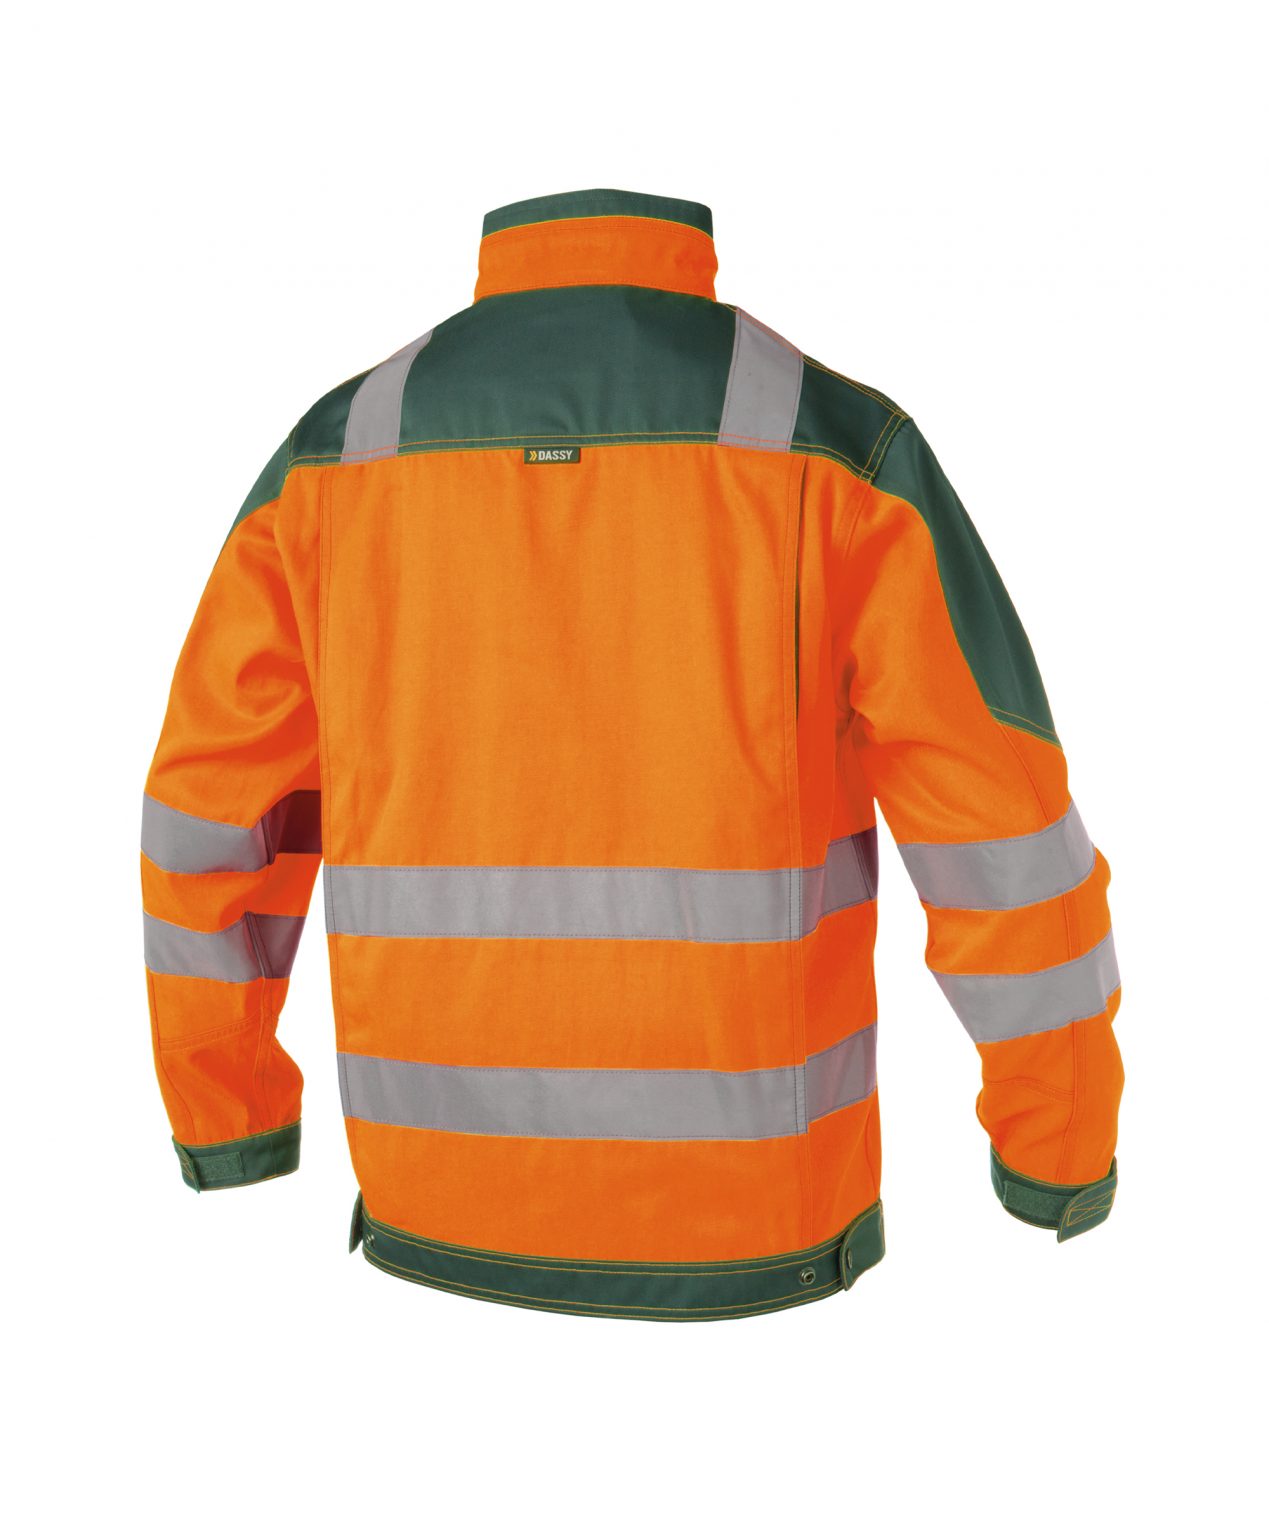 orlando high visibility work jacket fluo orange bottle green back